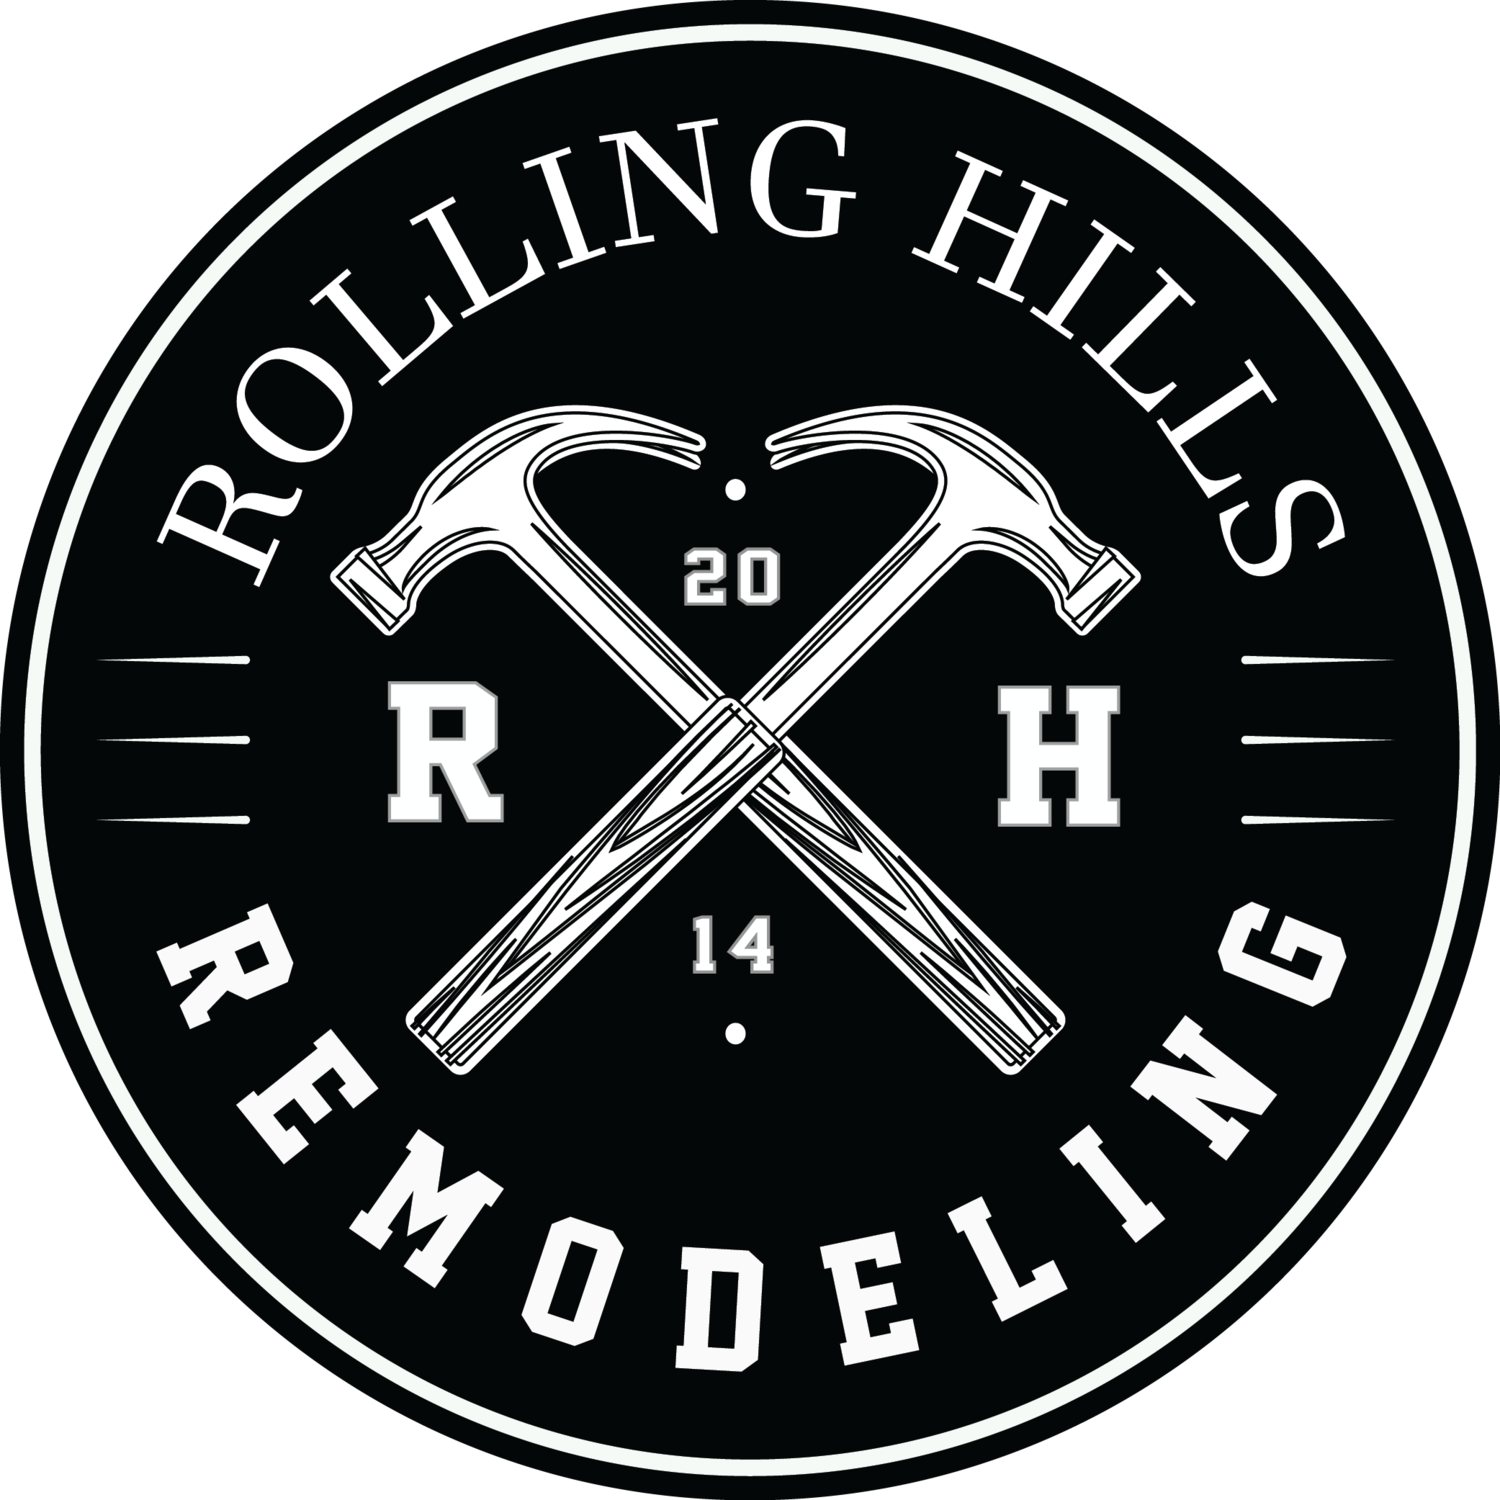 Rolling Hills Remodeling